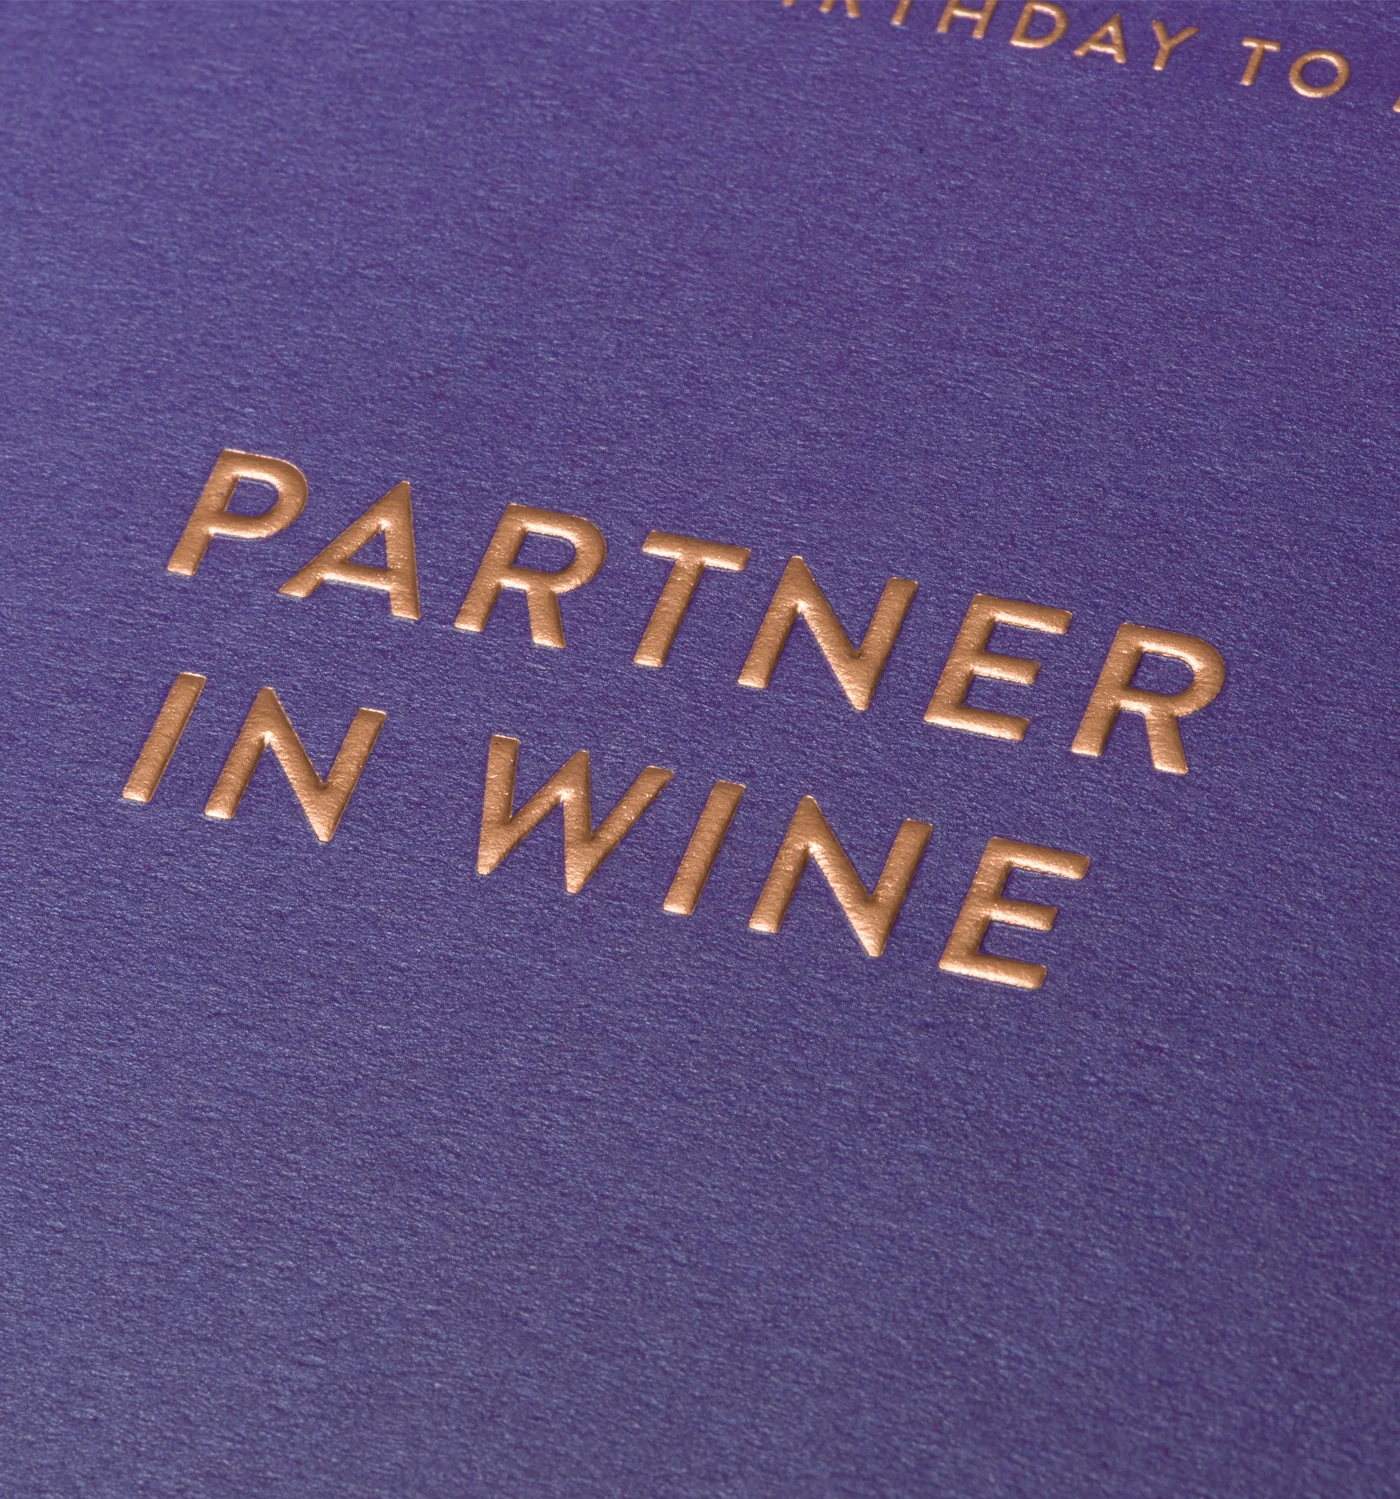 Partner in Wine Purple Birthday Card